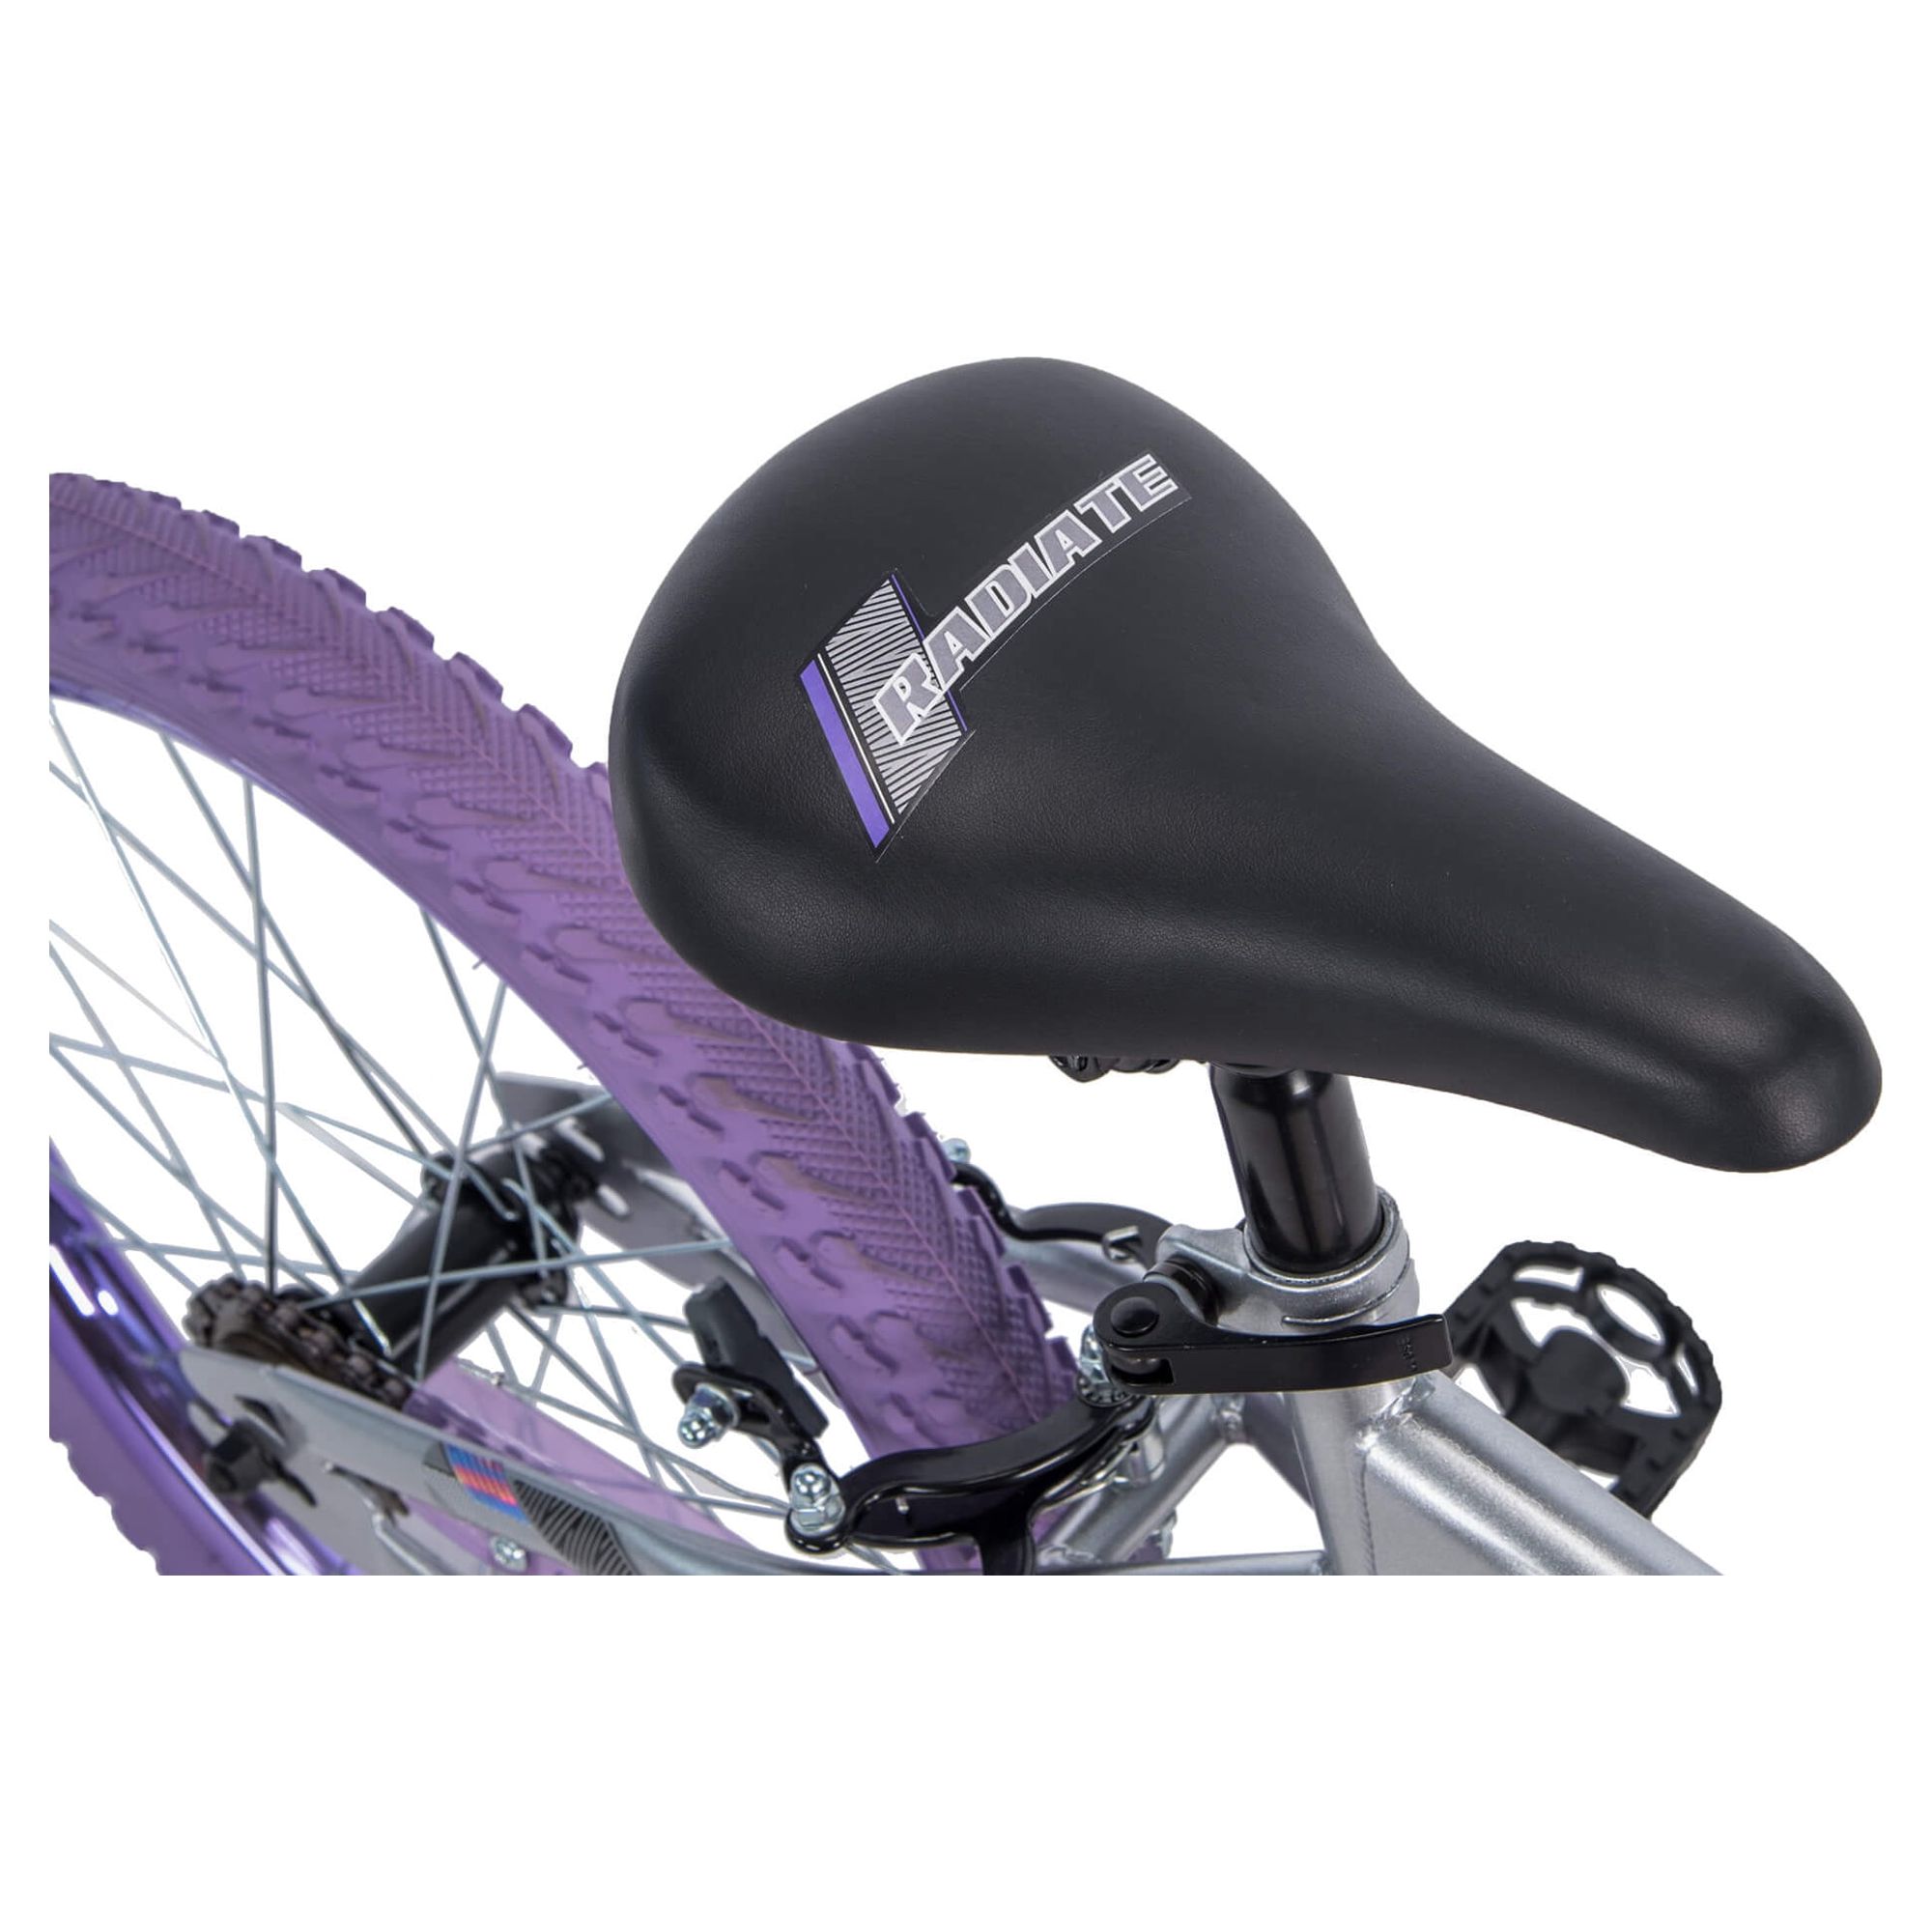 Huffy 20" Radium Girls' Metaloid BMX-Style Bike, Purple - image 4 of 6